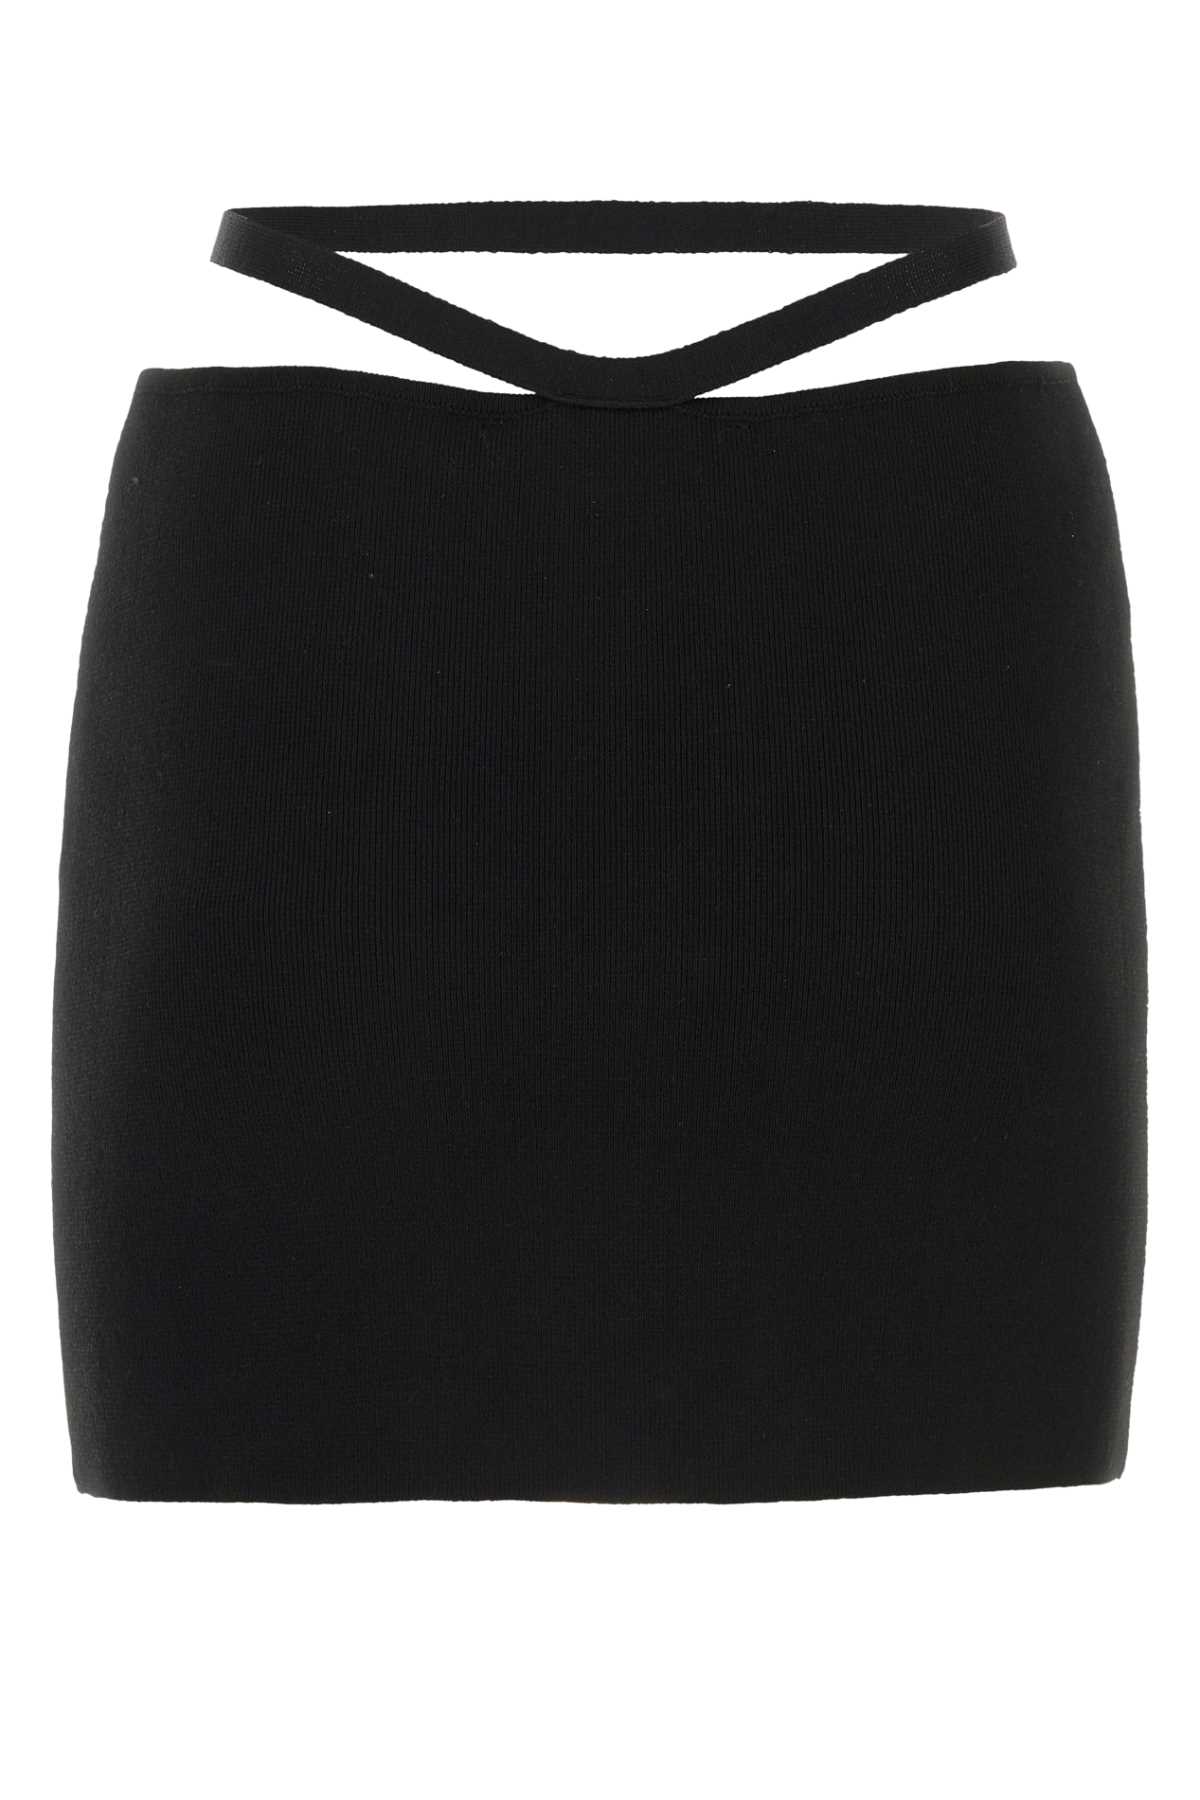 Andreädamo Black Stretch Viscose Blend Mini Skirt